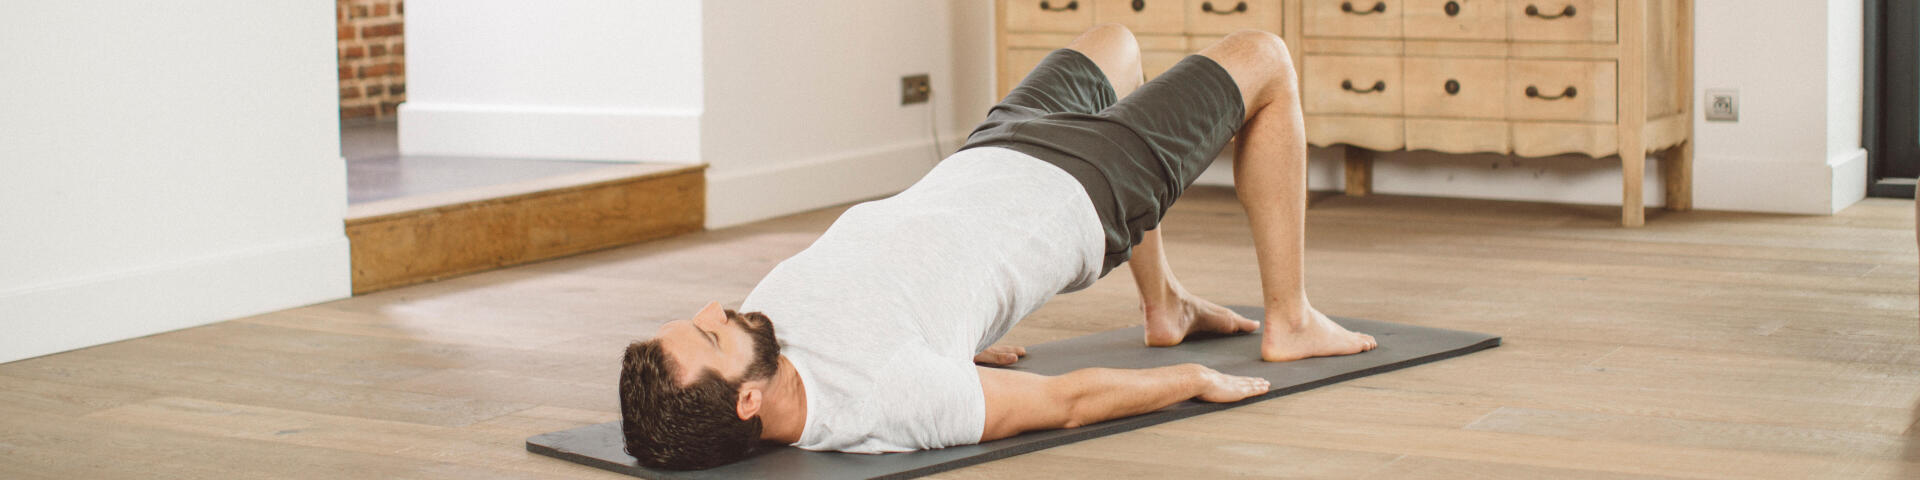 man doing yoga on a mat